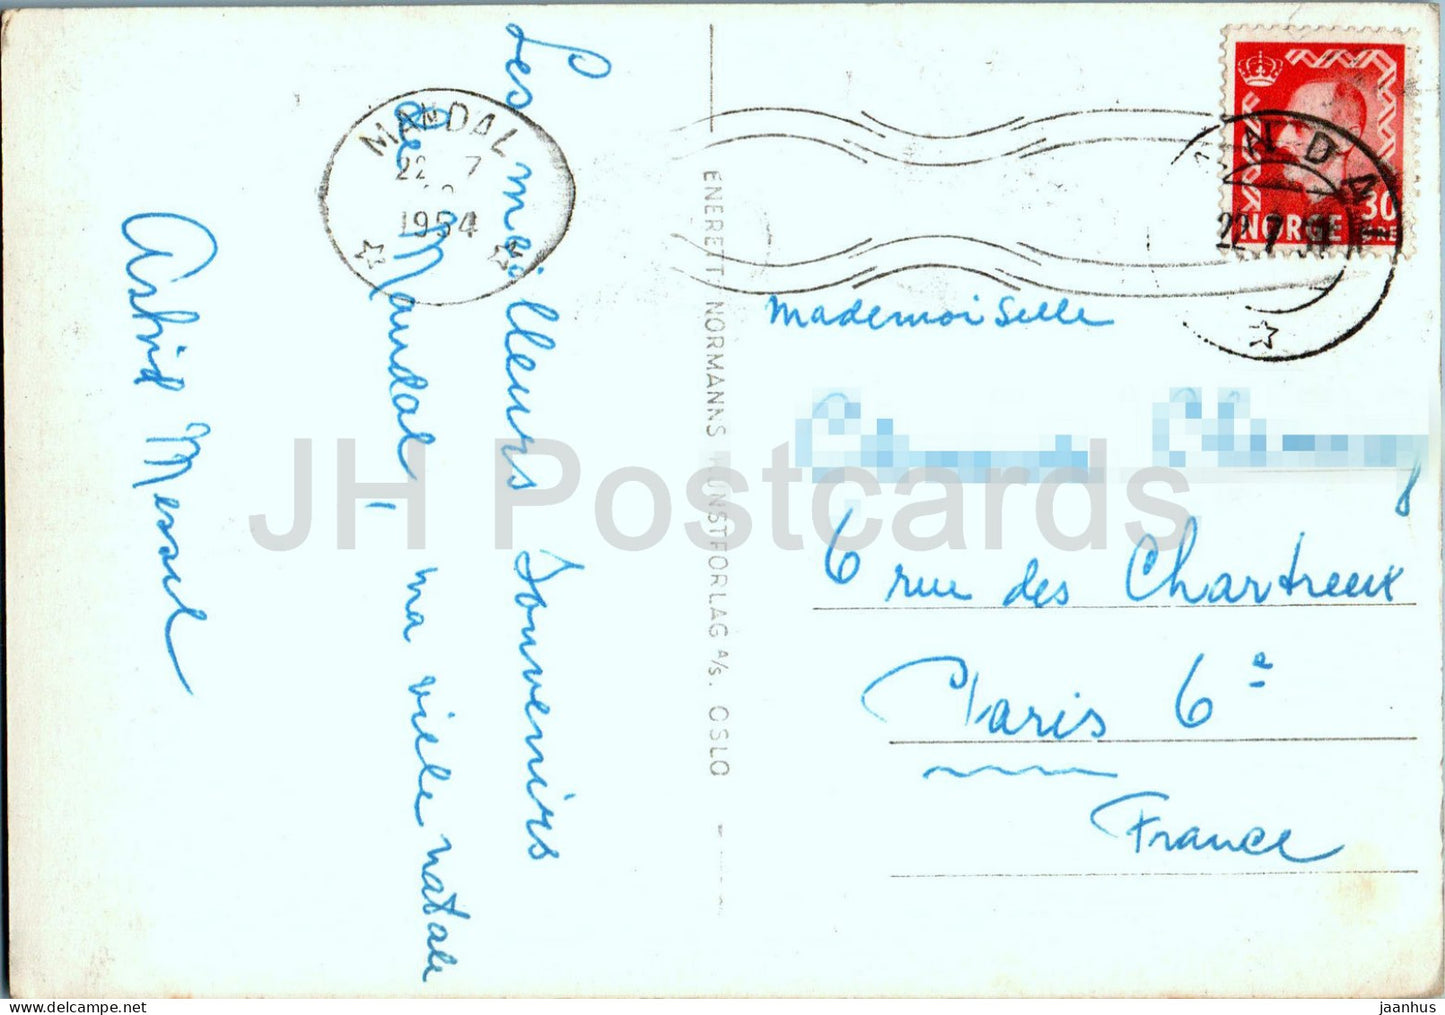 Sjosanden - Mandal - Strand - alte Postkarte - 1954 - Norwegen - gebraucht 